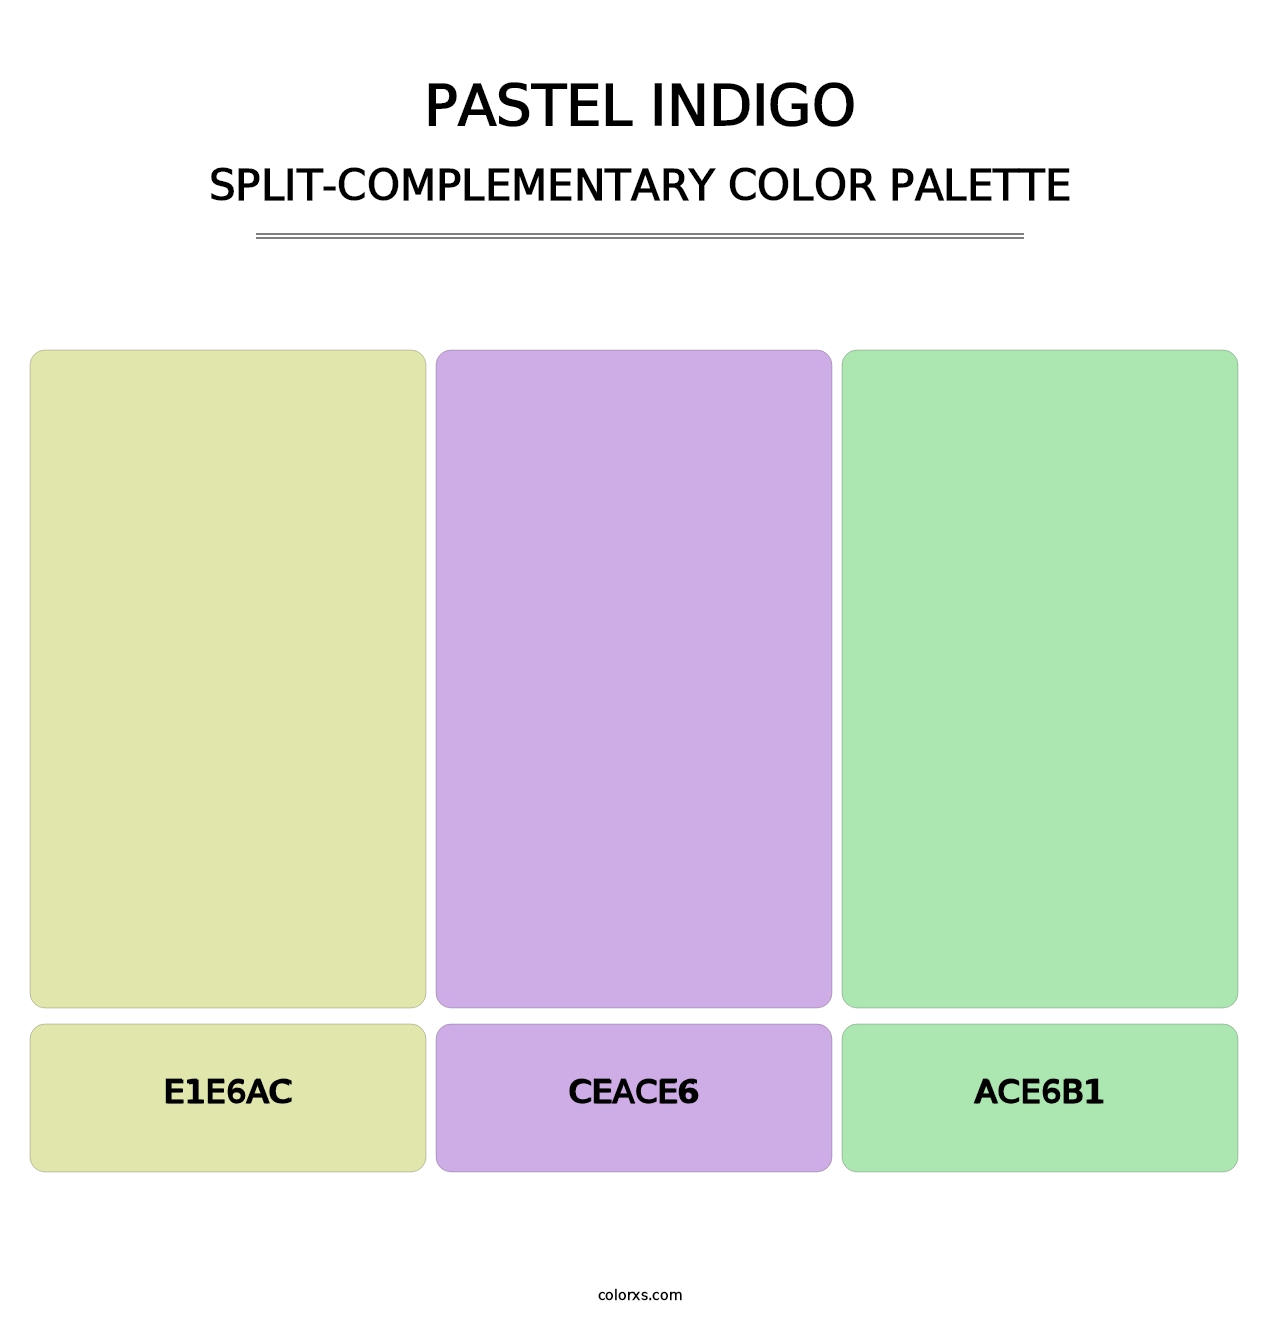 Pastel Indigo - Split-Complementary Color Palette